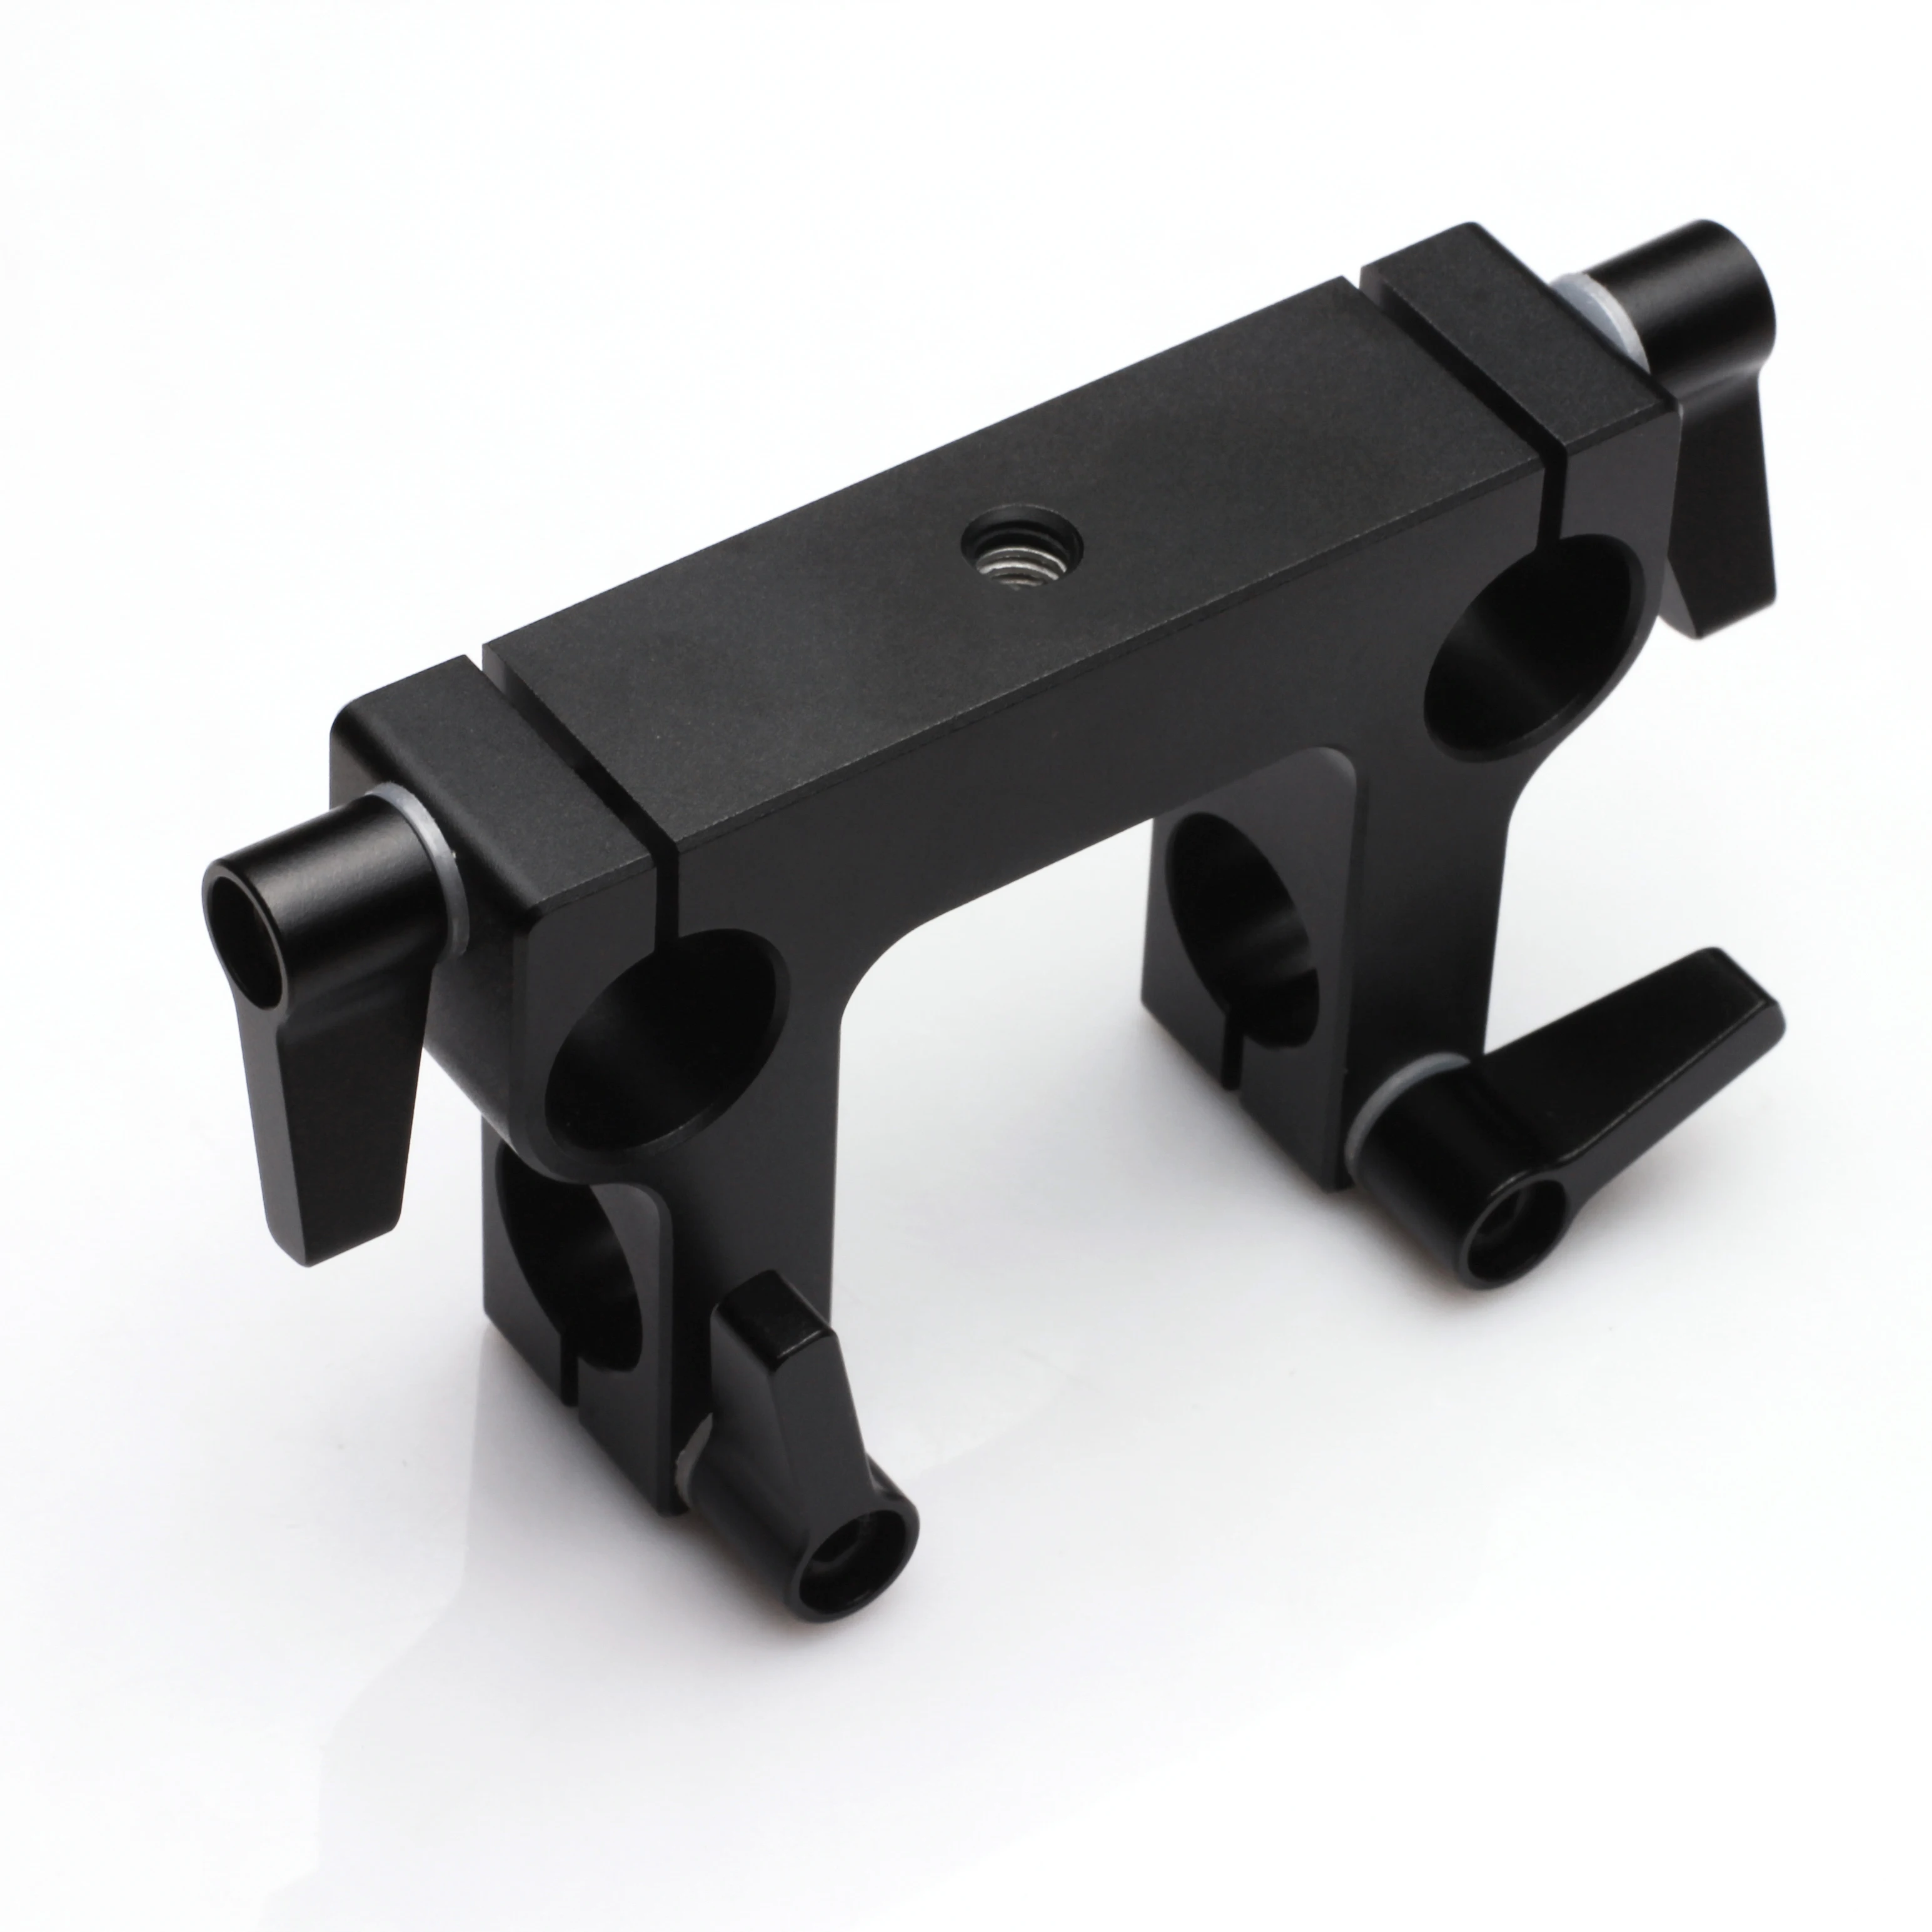 

4-Holes 15mm Rod Clamp Converter fr Light Weight Support Film 4K 8K Mirrorless DSLR Camera Rig Follow Focus Monitor Grip Handle